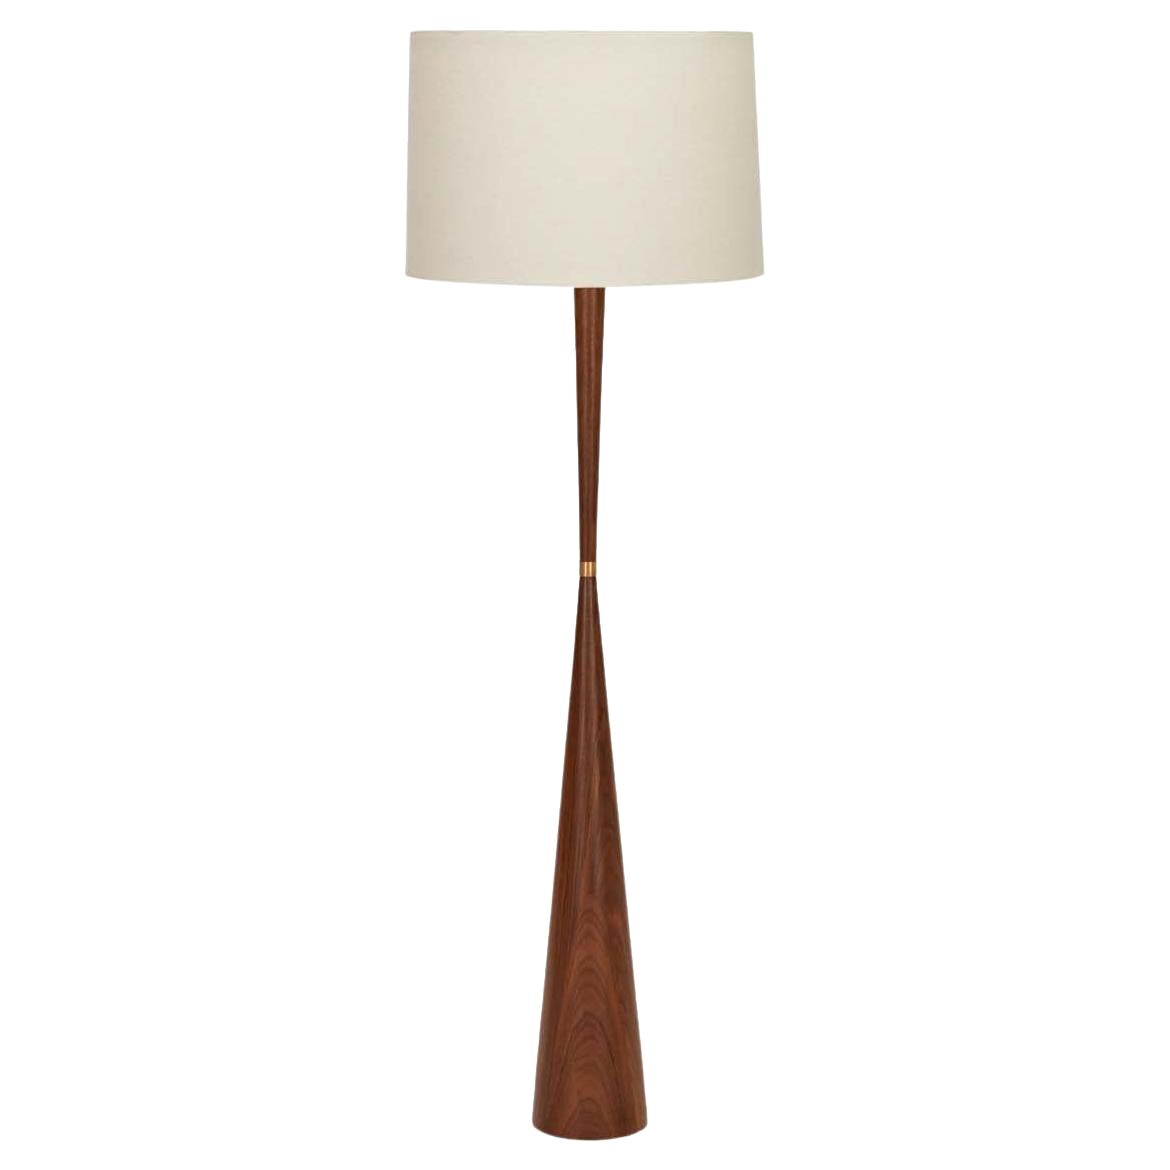 El Monte Lamp by Lawson-Fenning For Sale